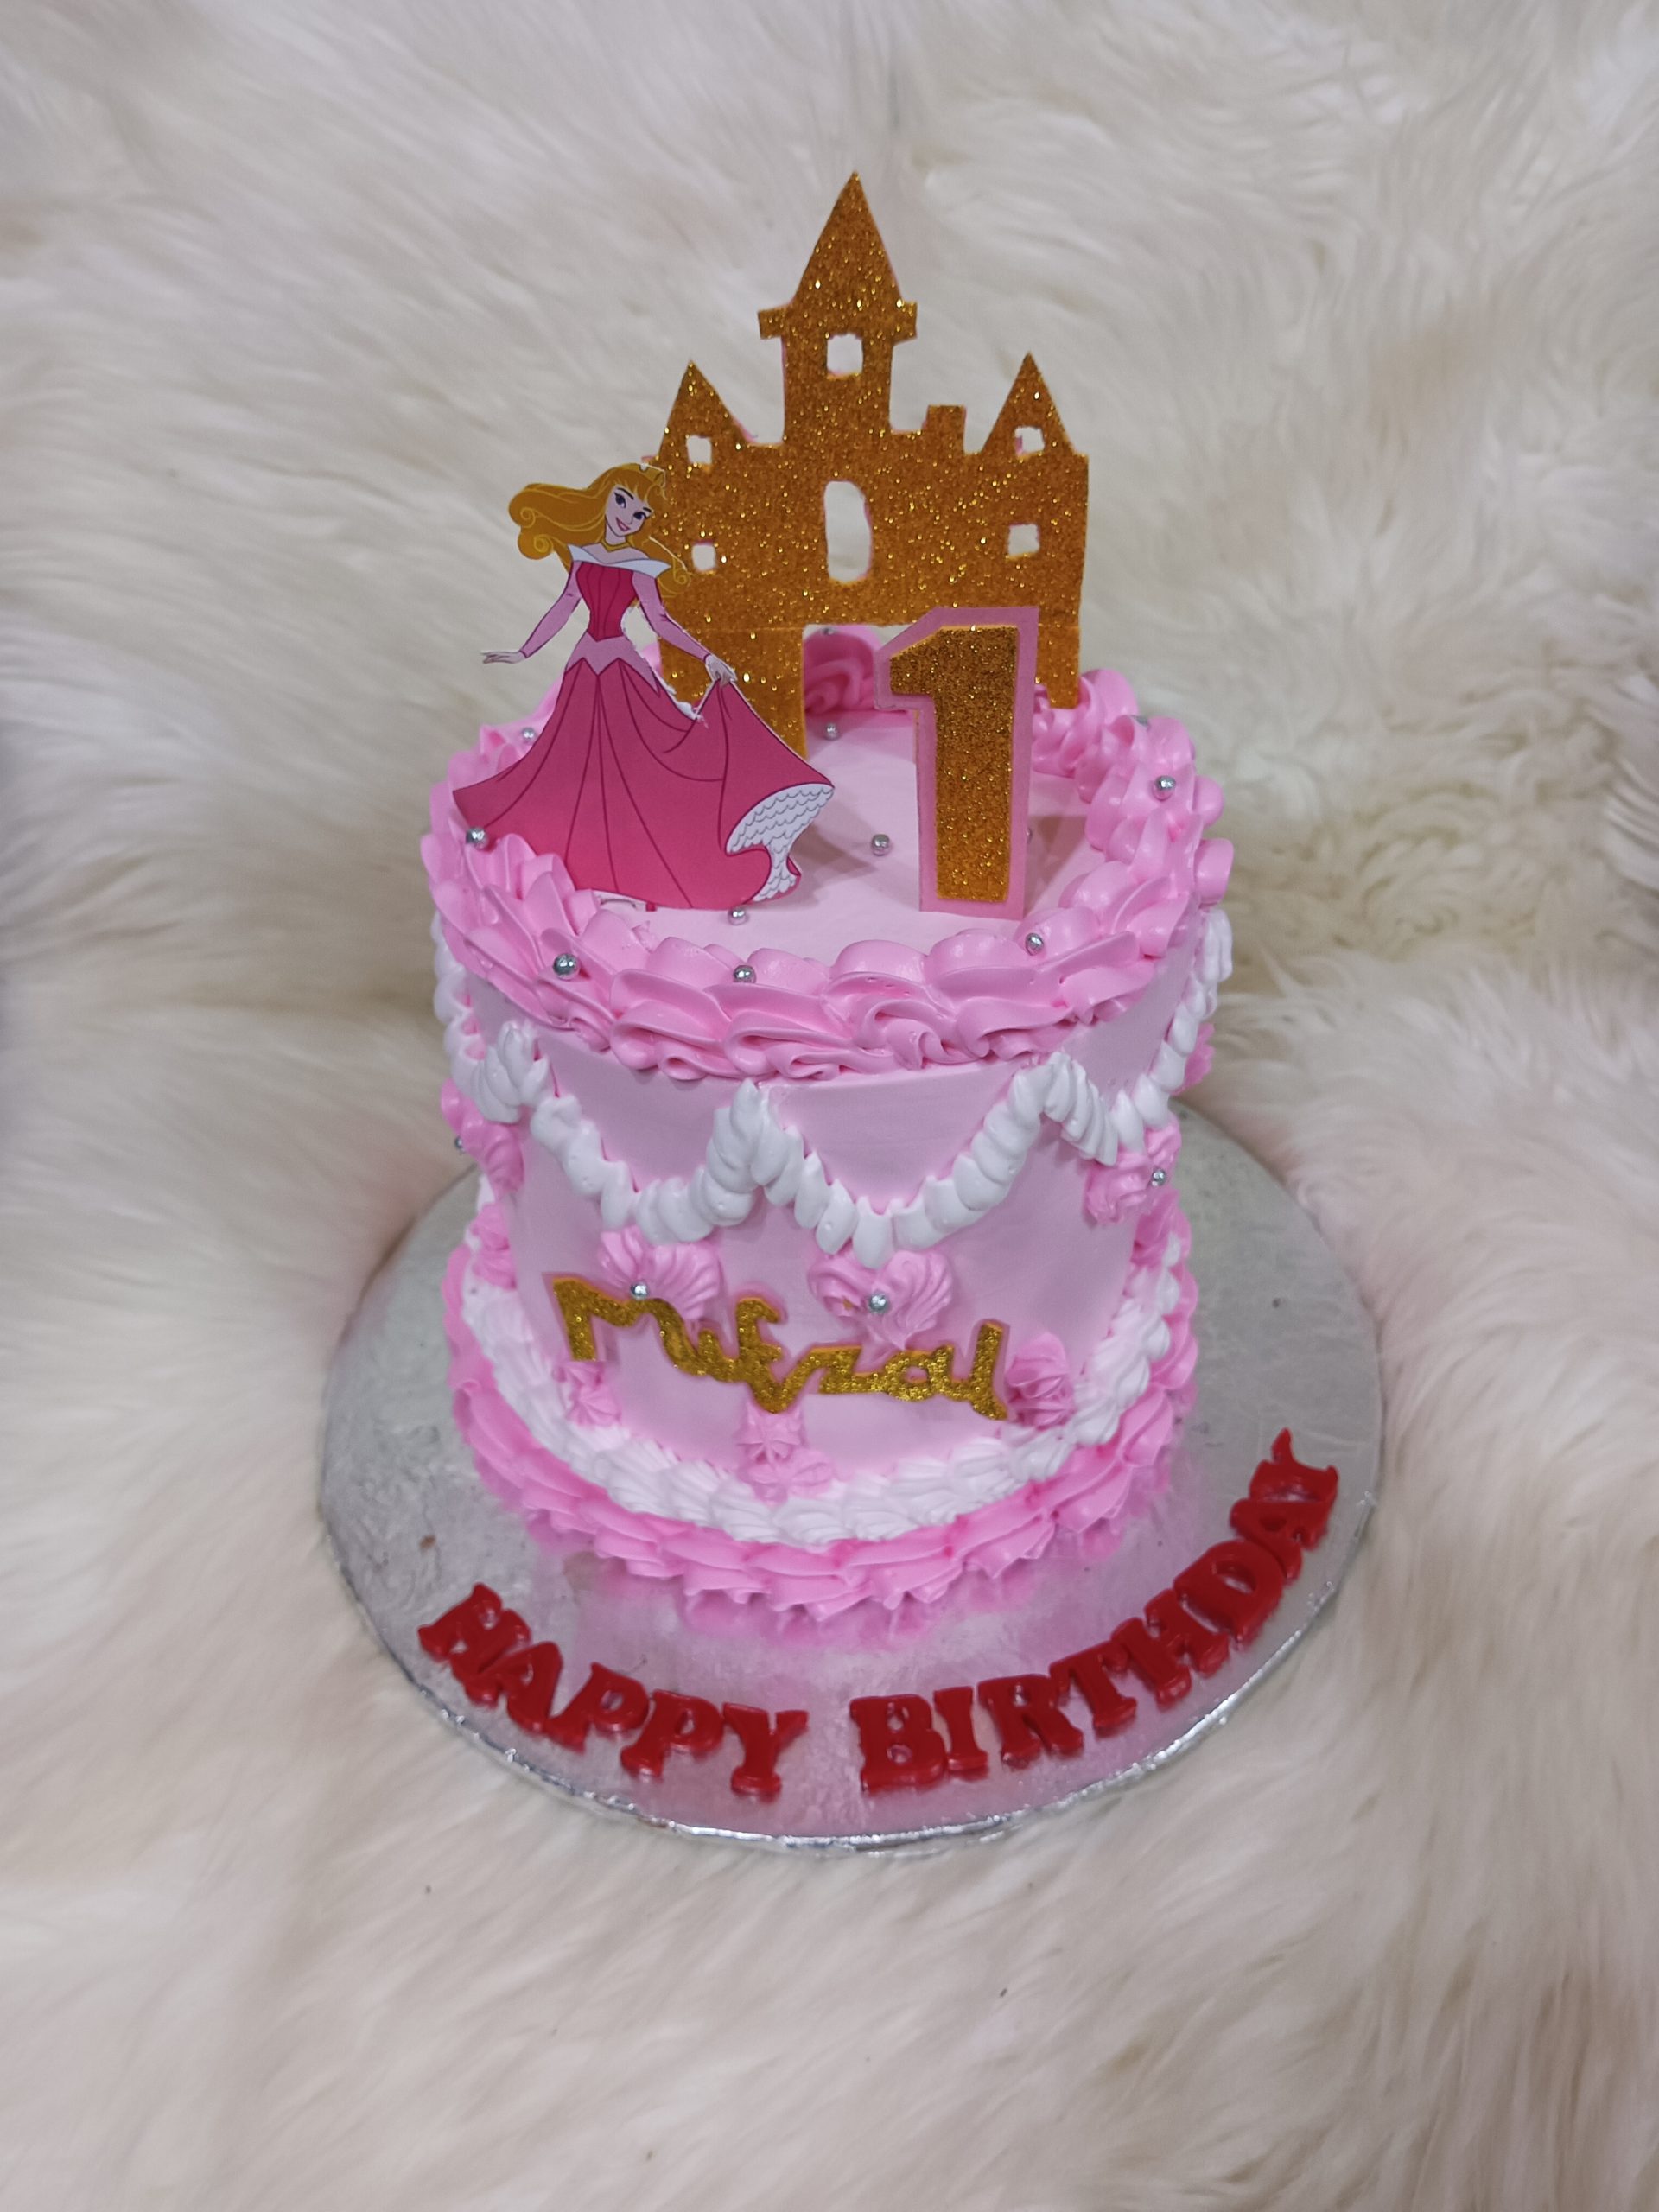 Happy birthday Tehreem/Tehreem birthday song/happy birthday cake and wishes  for Tehreem - YouTube